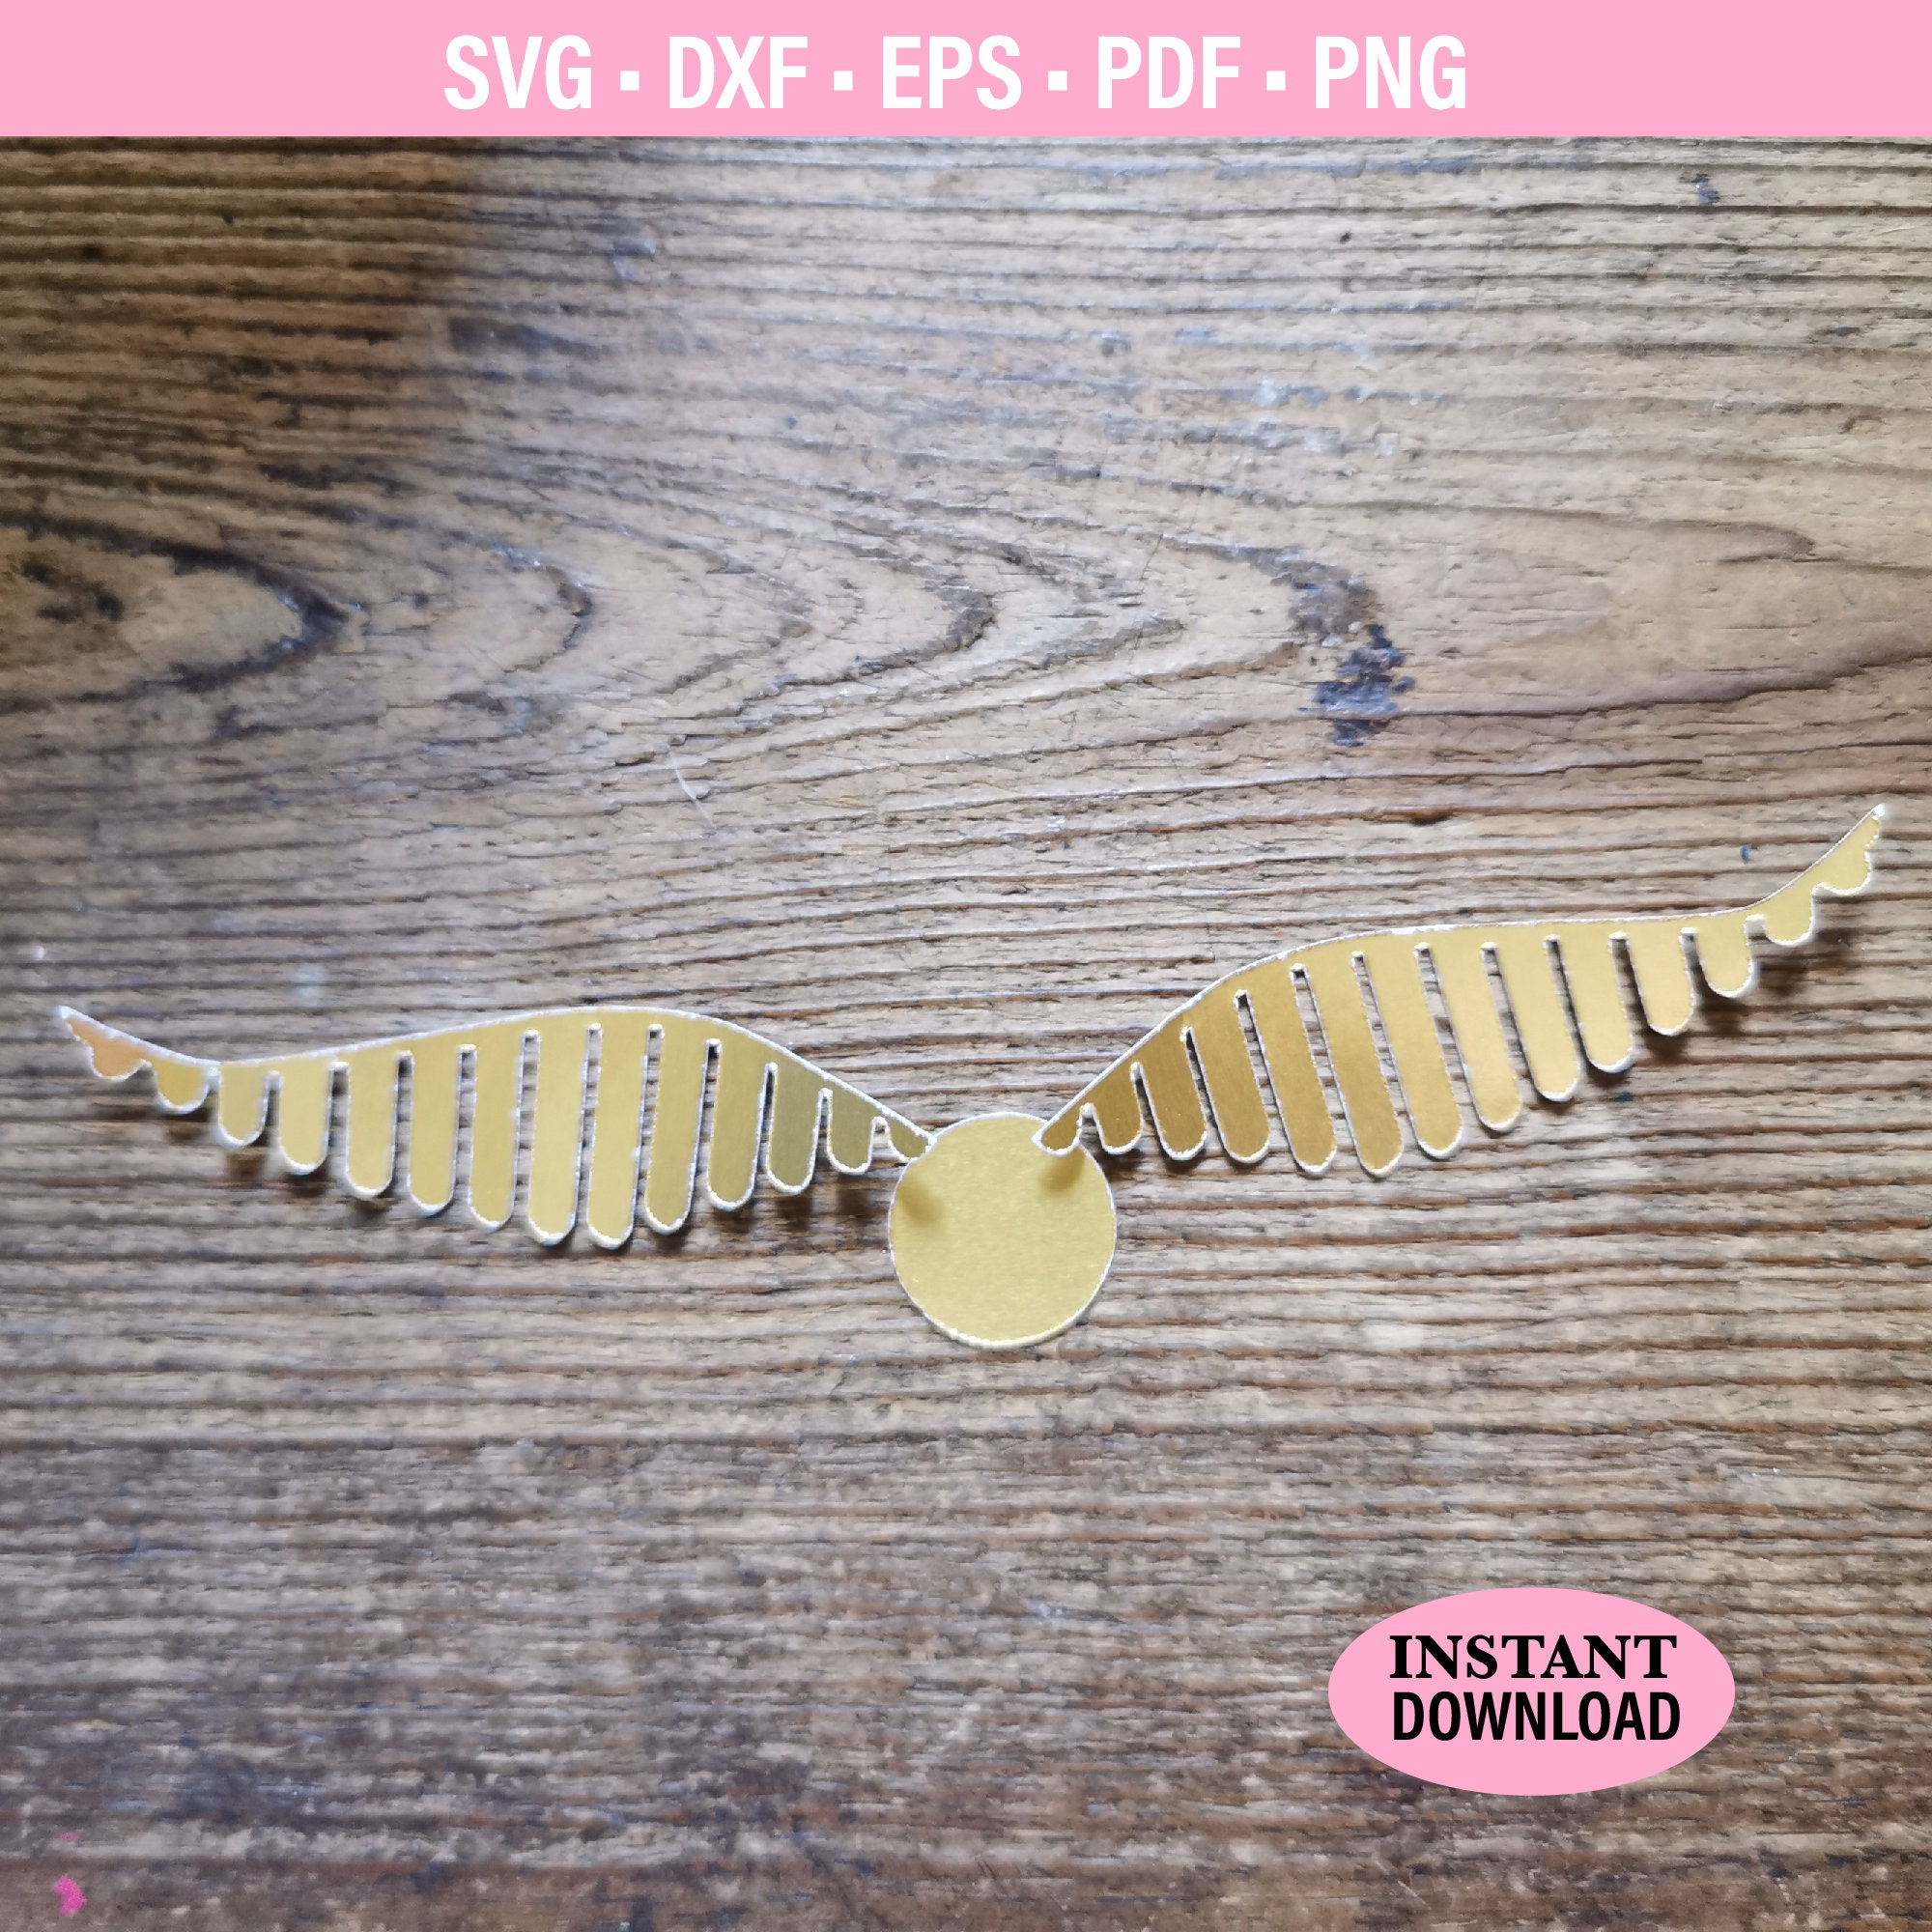 Ferrero Rocher Snitch Wings PDF